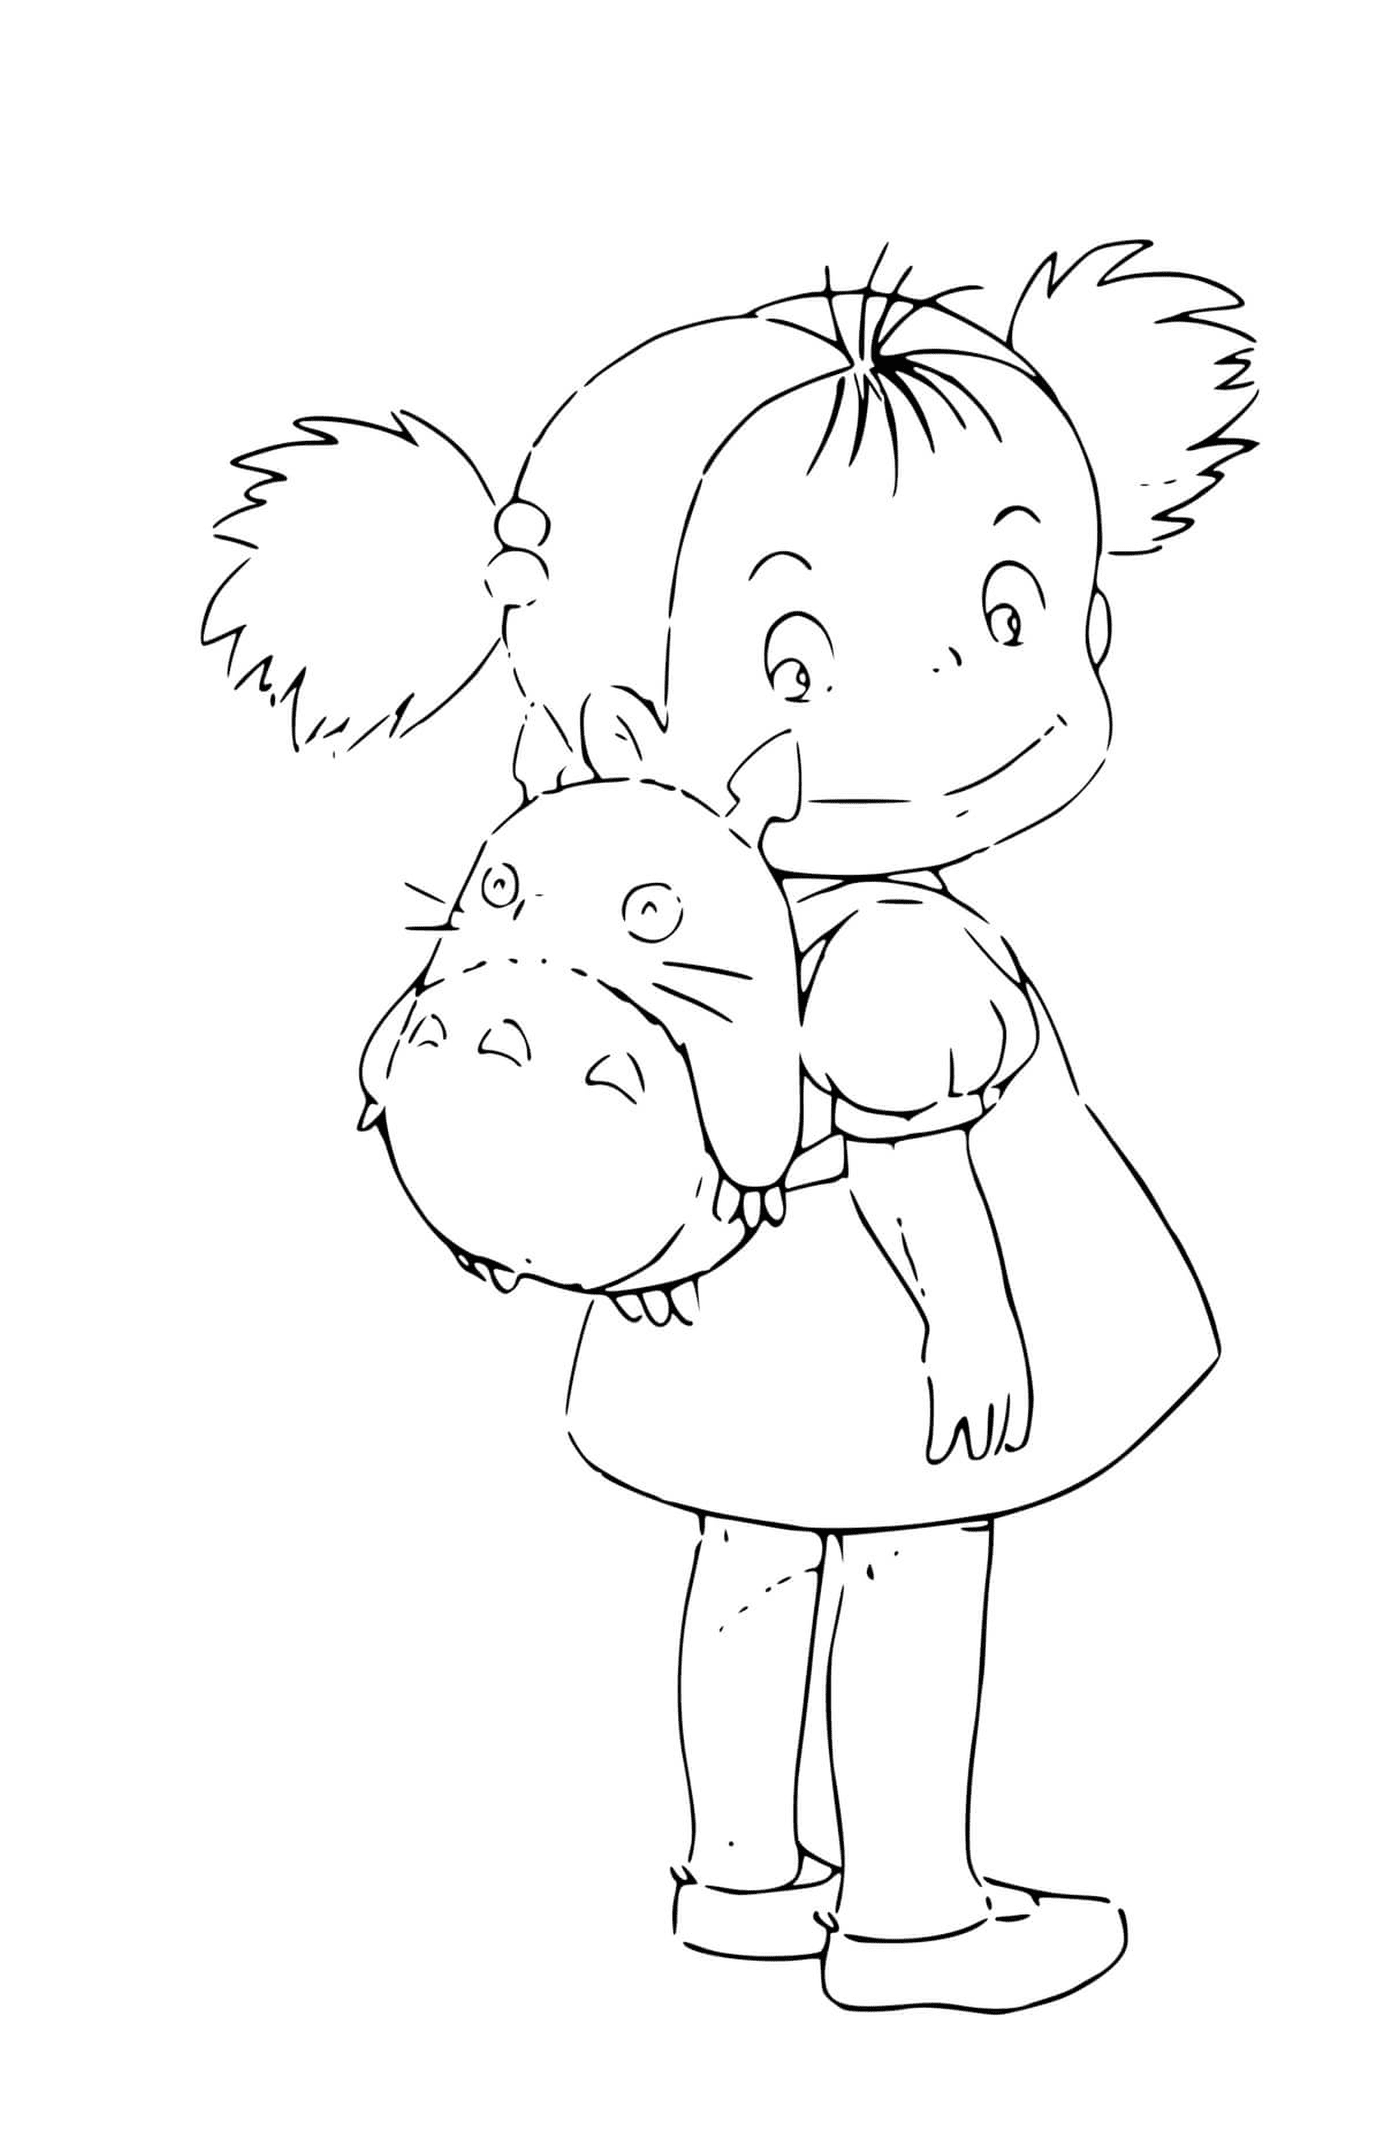  Little girl holding a stuffed animal 